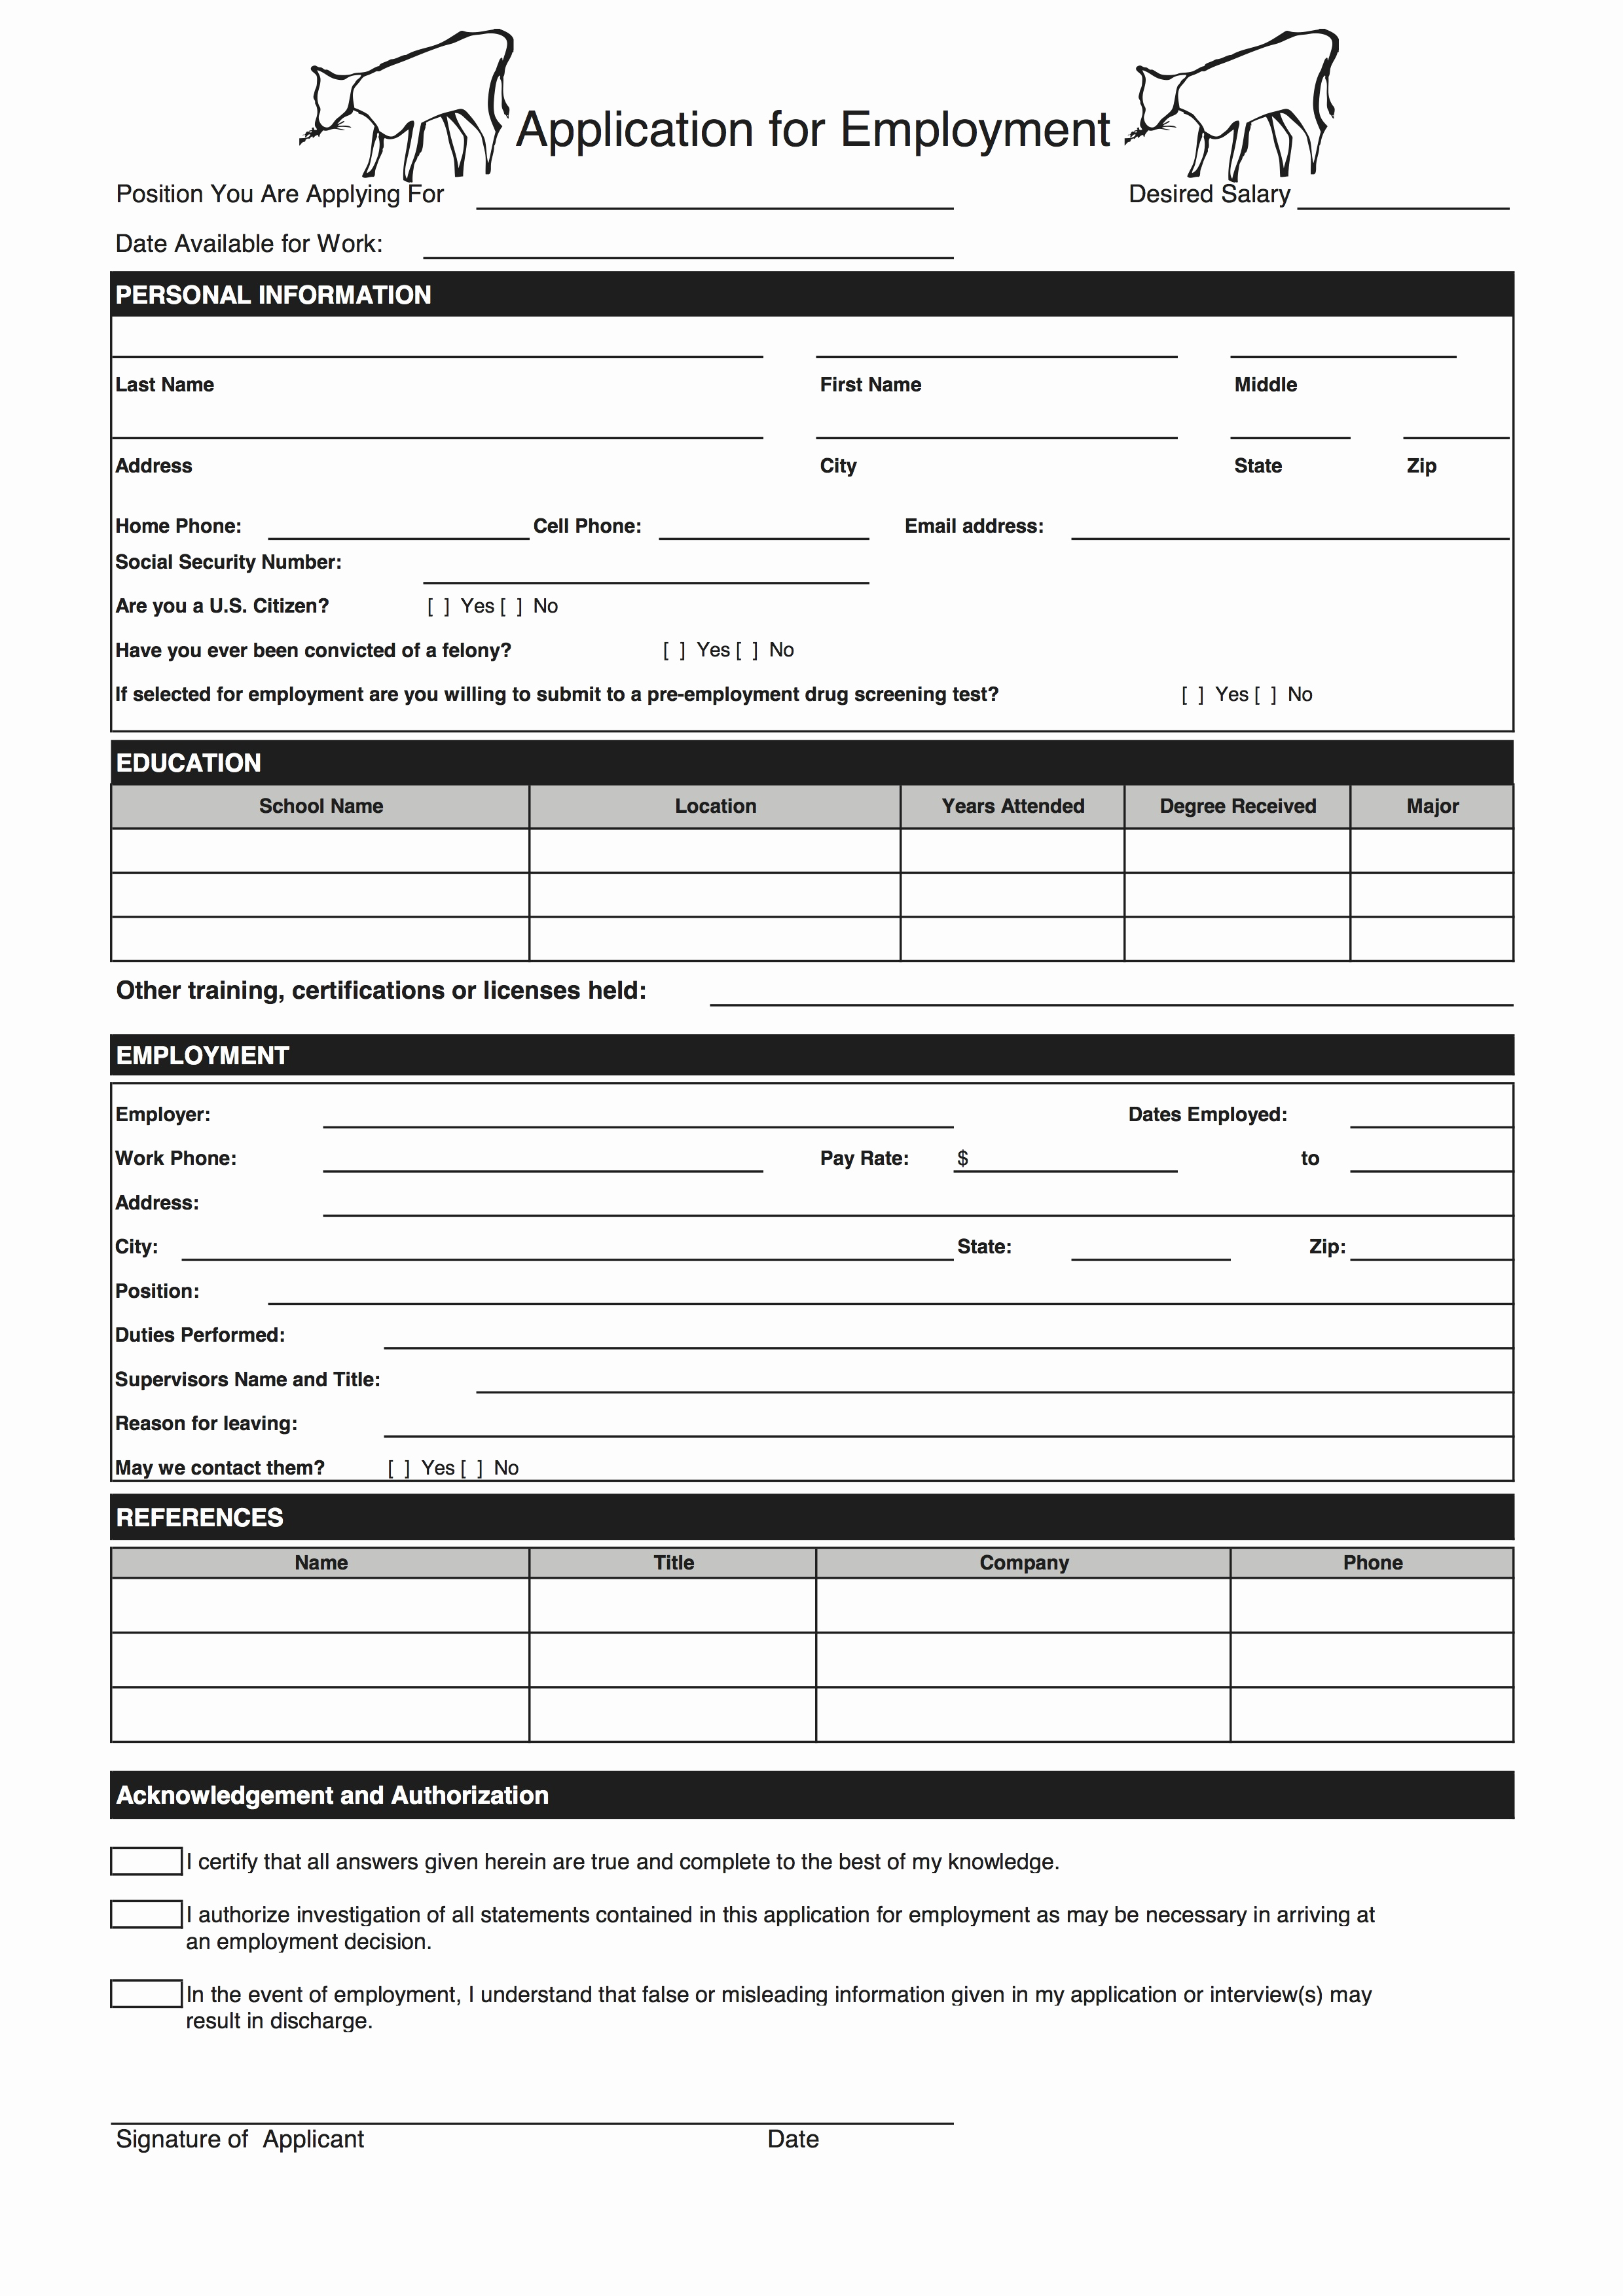 Job Application form Sample Beautiful Job Applications